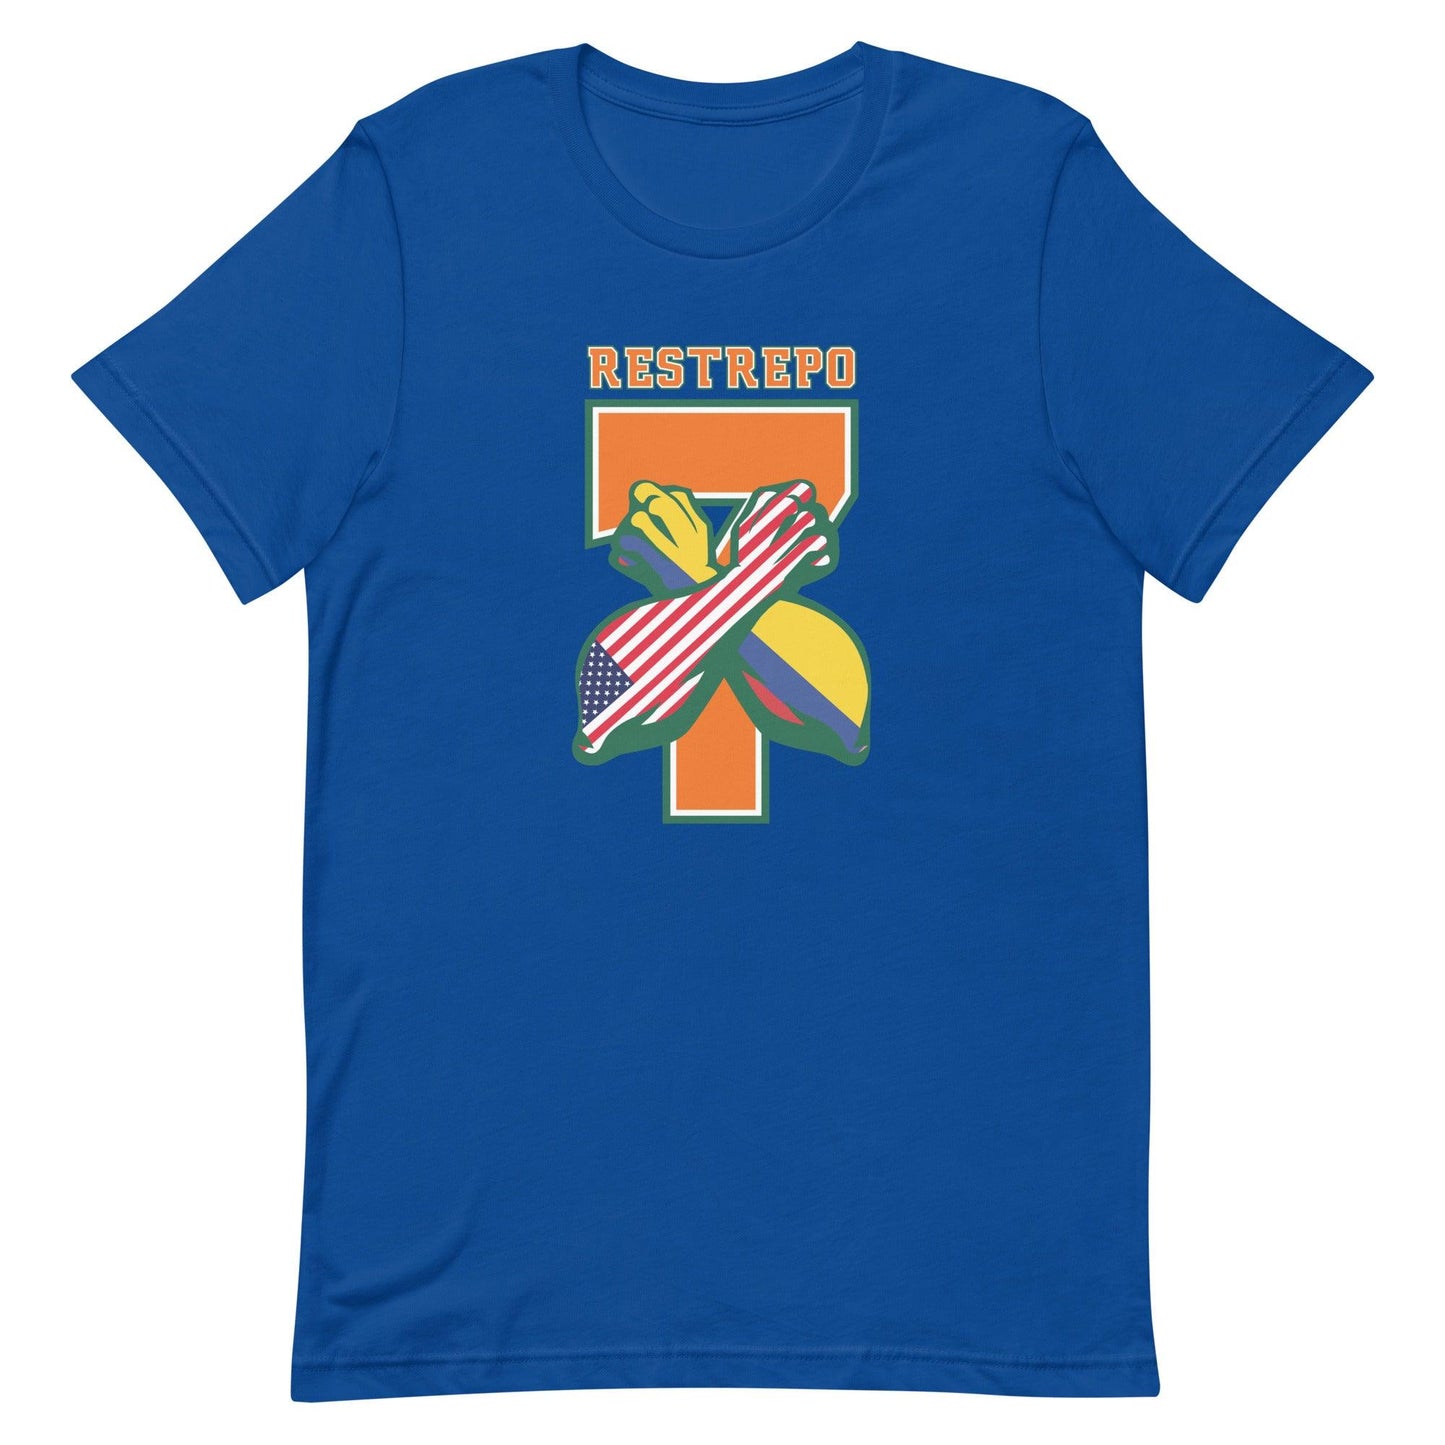 Xavier Restrepo "Represent" t-shirt - Fan Arch